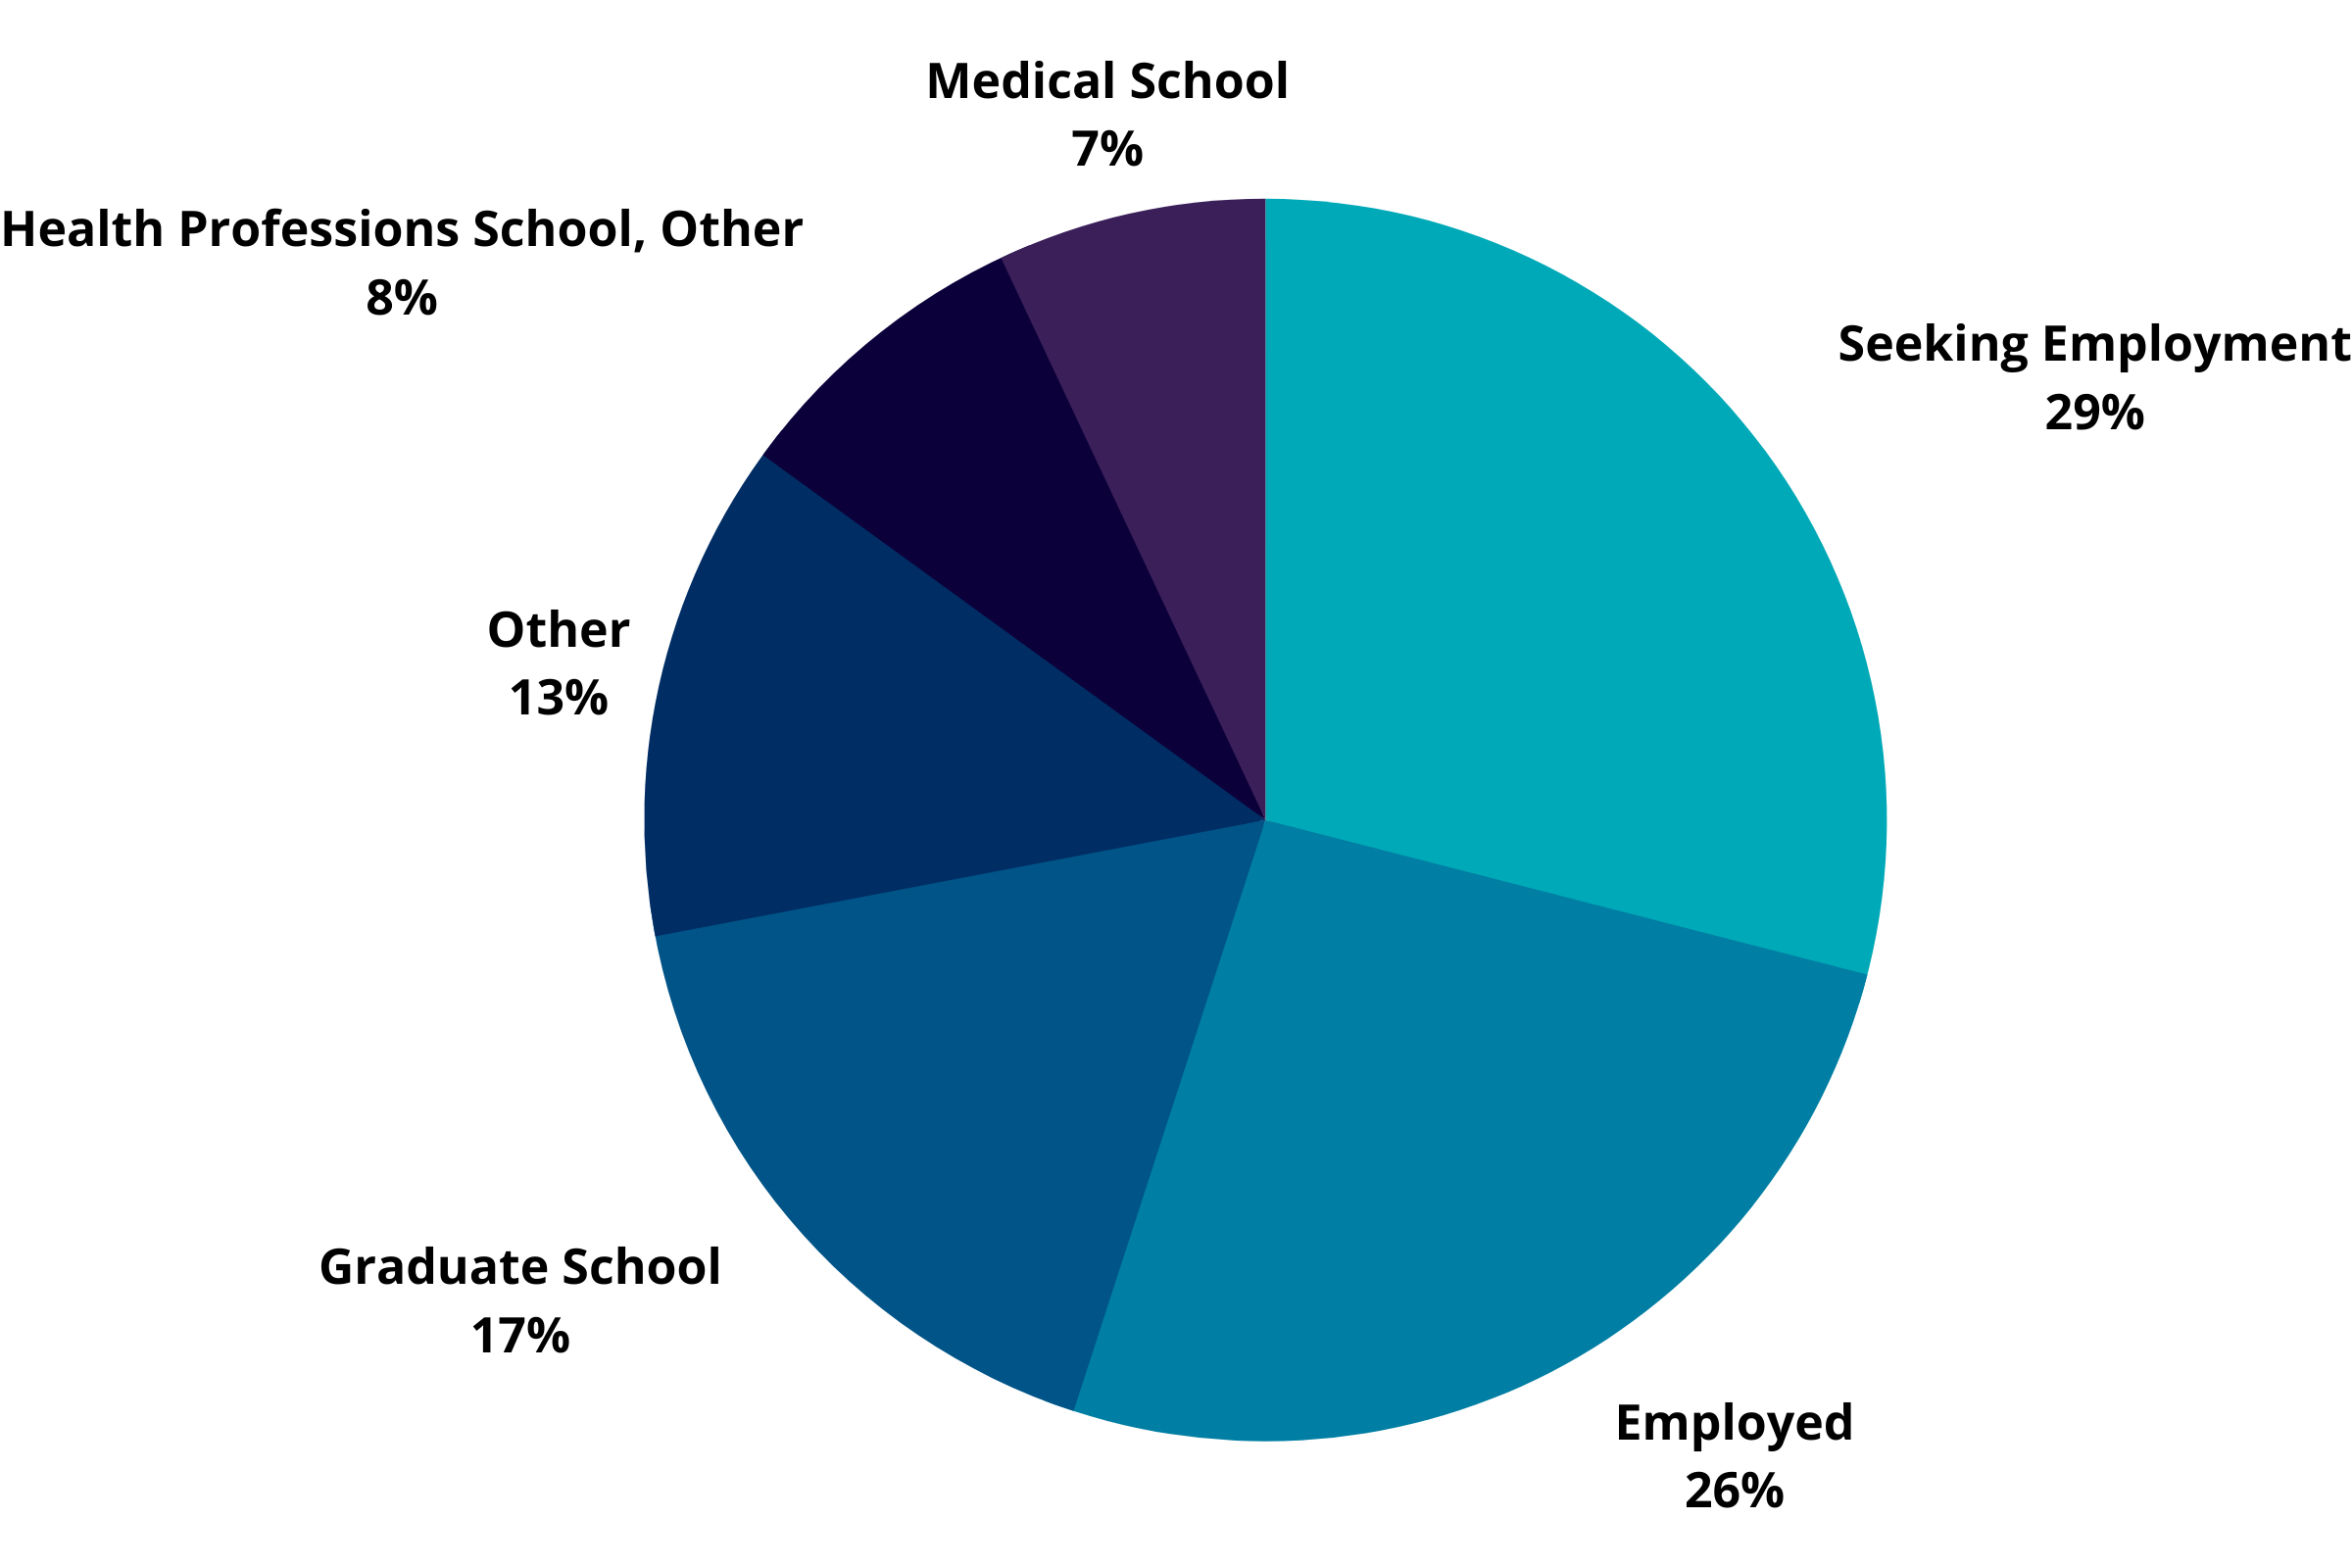 Chemistry Graduation Outcomes: Seeking Employment 29%, Employed 26%, Graduate School 17%, Medical School 7%, Health Professions School 8%, Other 13%